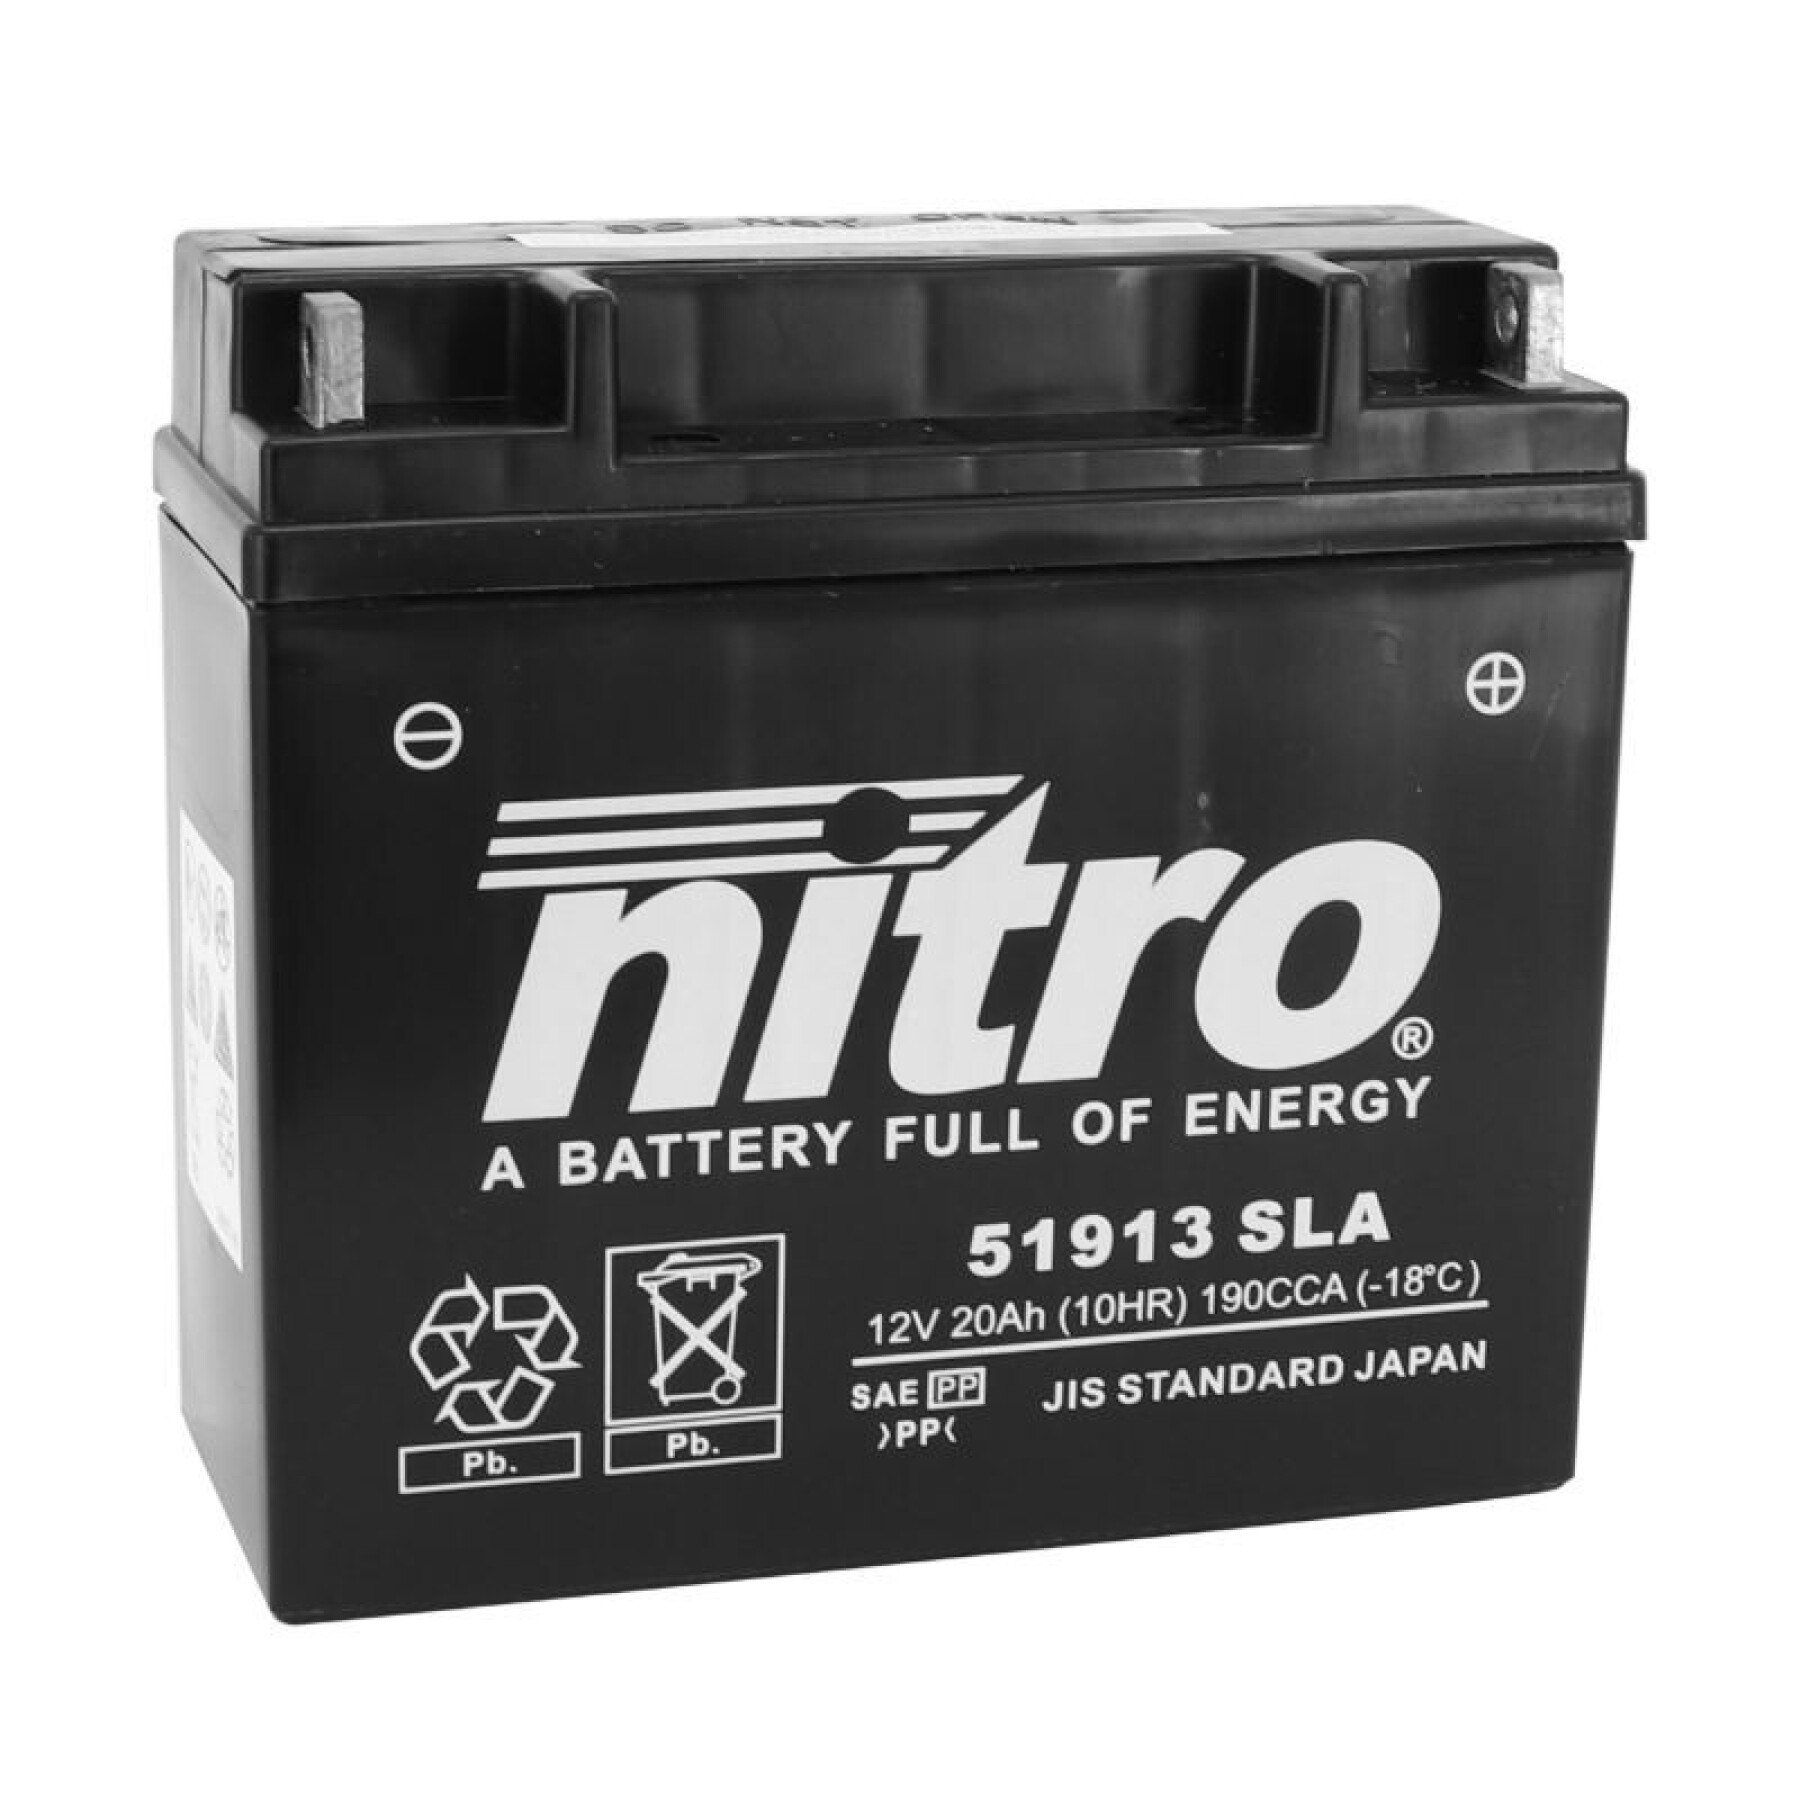 Batteria Nitro 51913 Sla 12v 20 Ah